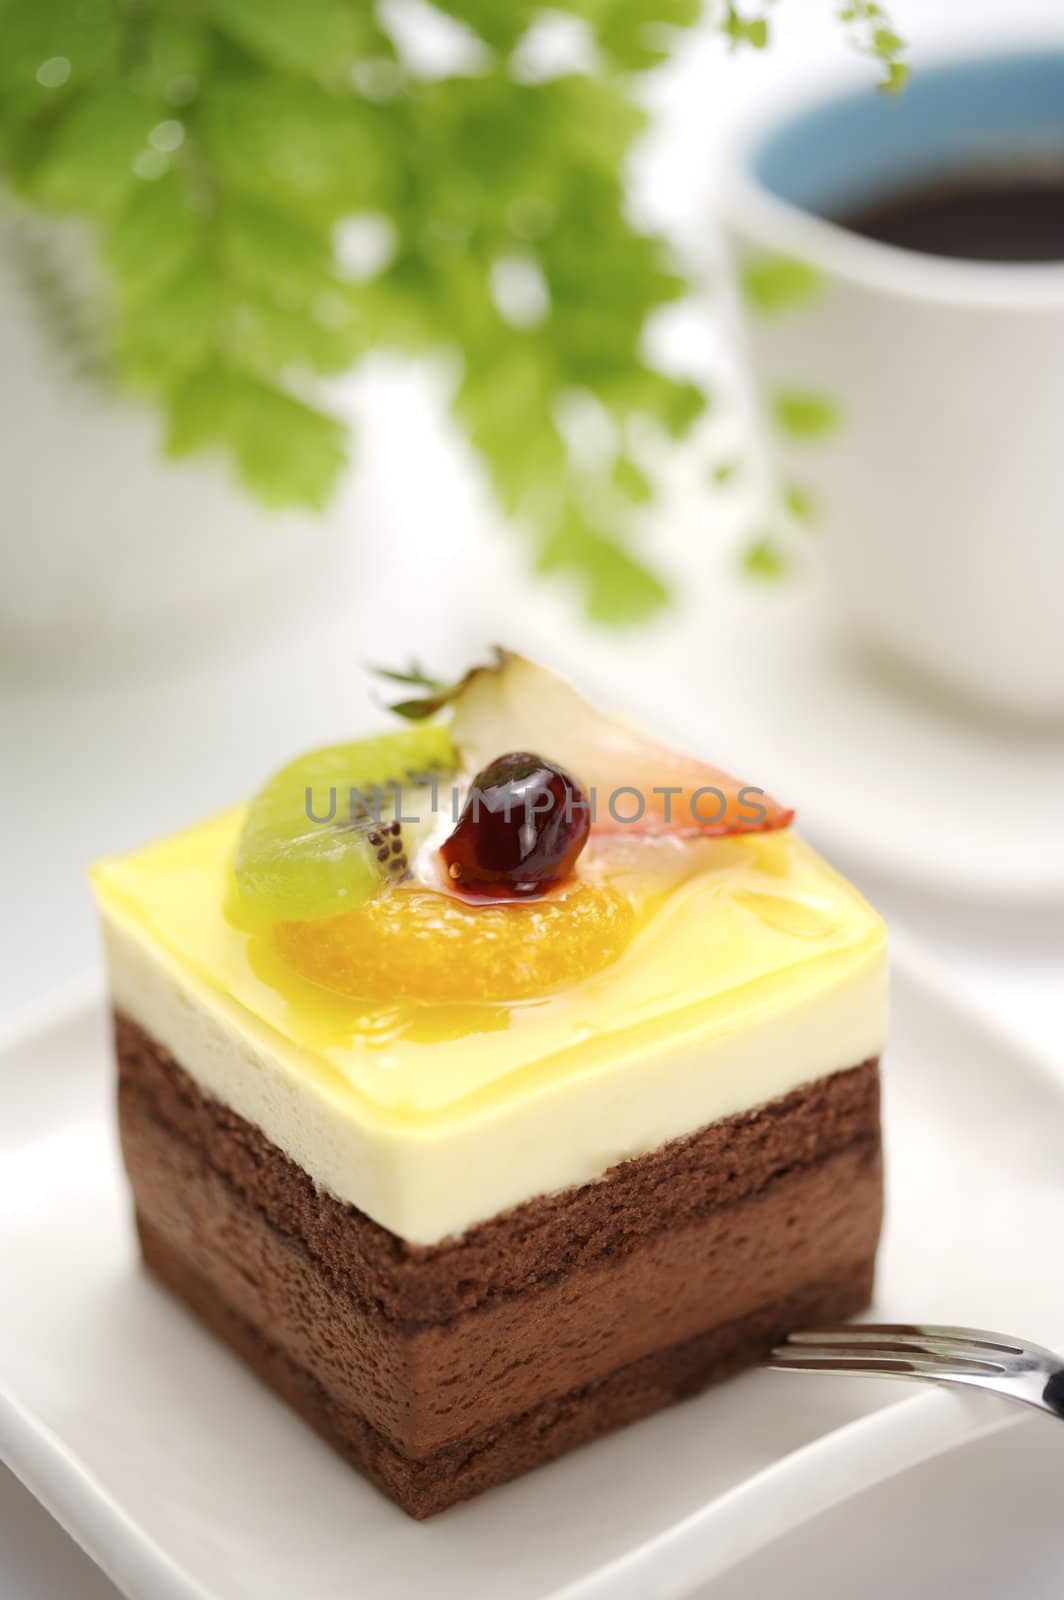 Fruit sponge cake slice by Baltus